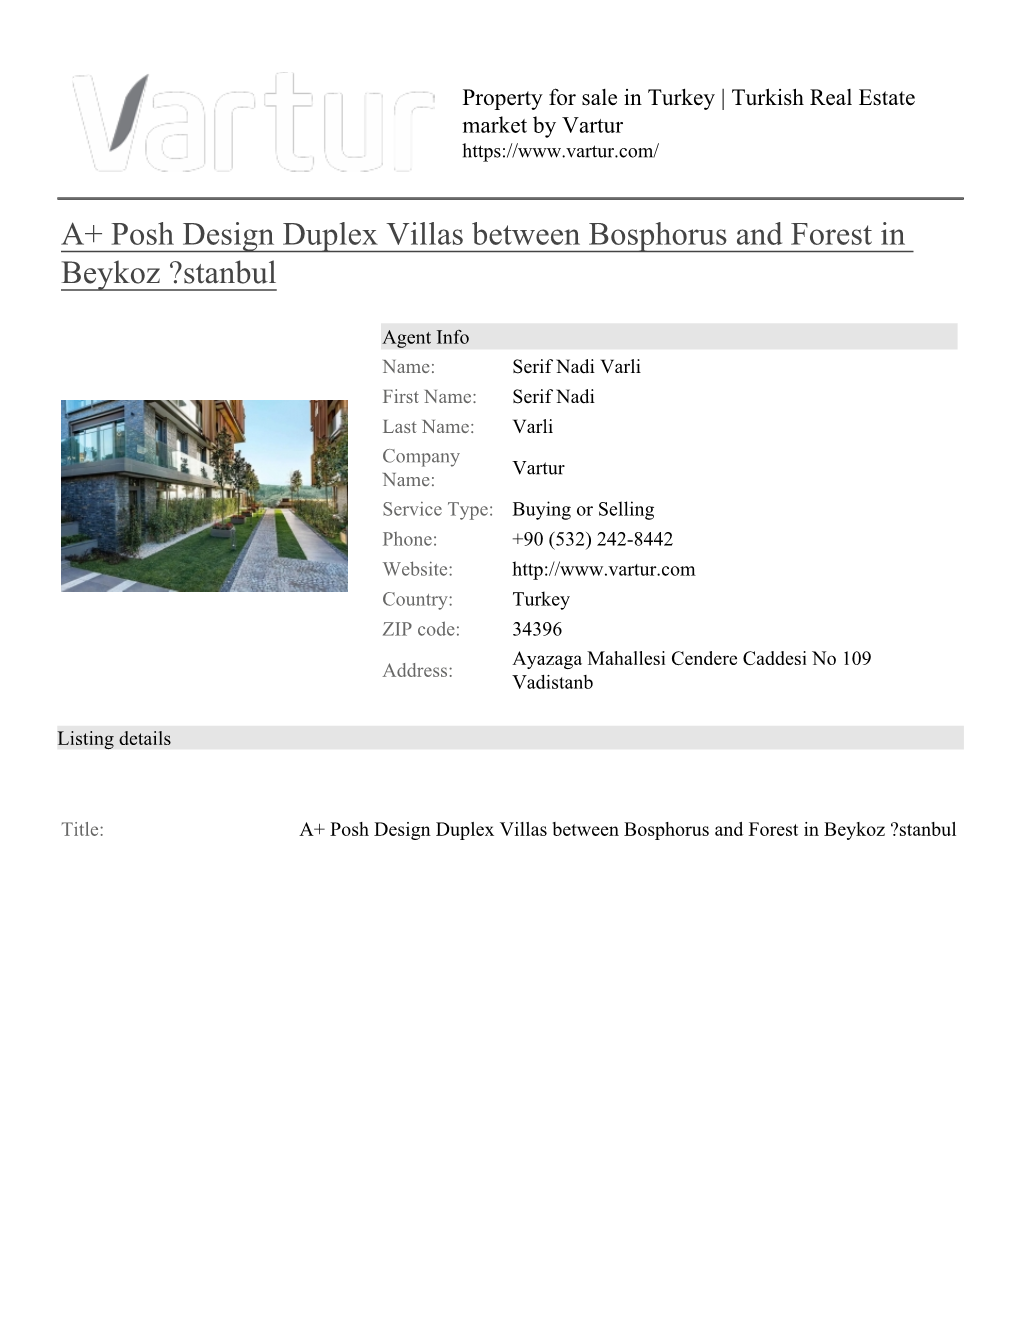 A+ Posh Design Duplex Villas Between Bosphorus and Forest in Beykoz ?Stanbul